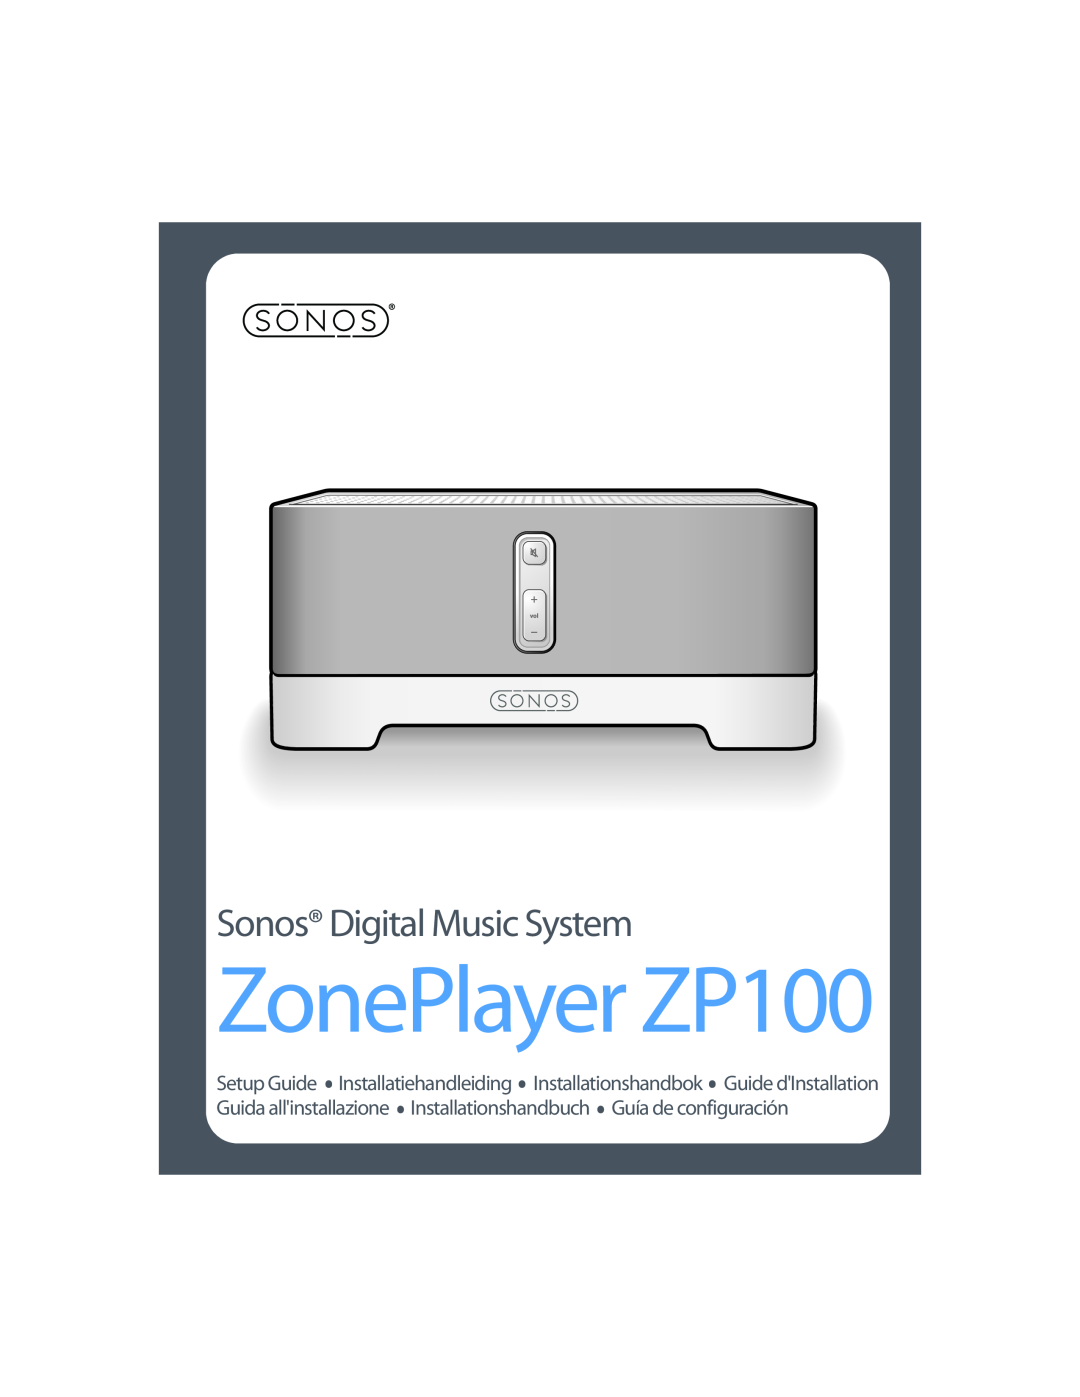 Sonos setup guide ZonePlayer ZP100, Sonos Digital Music System 